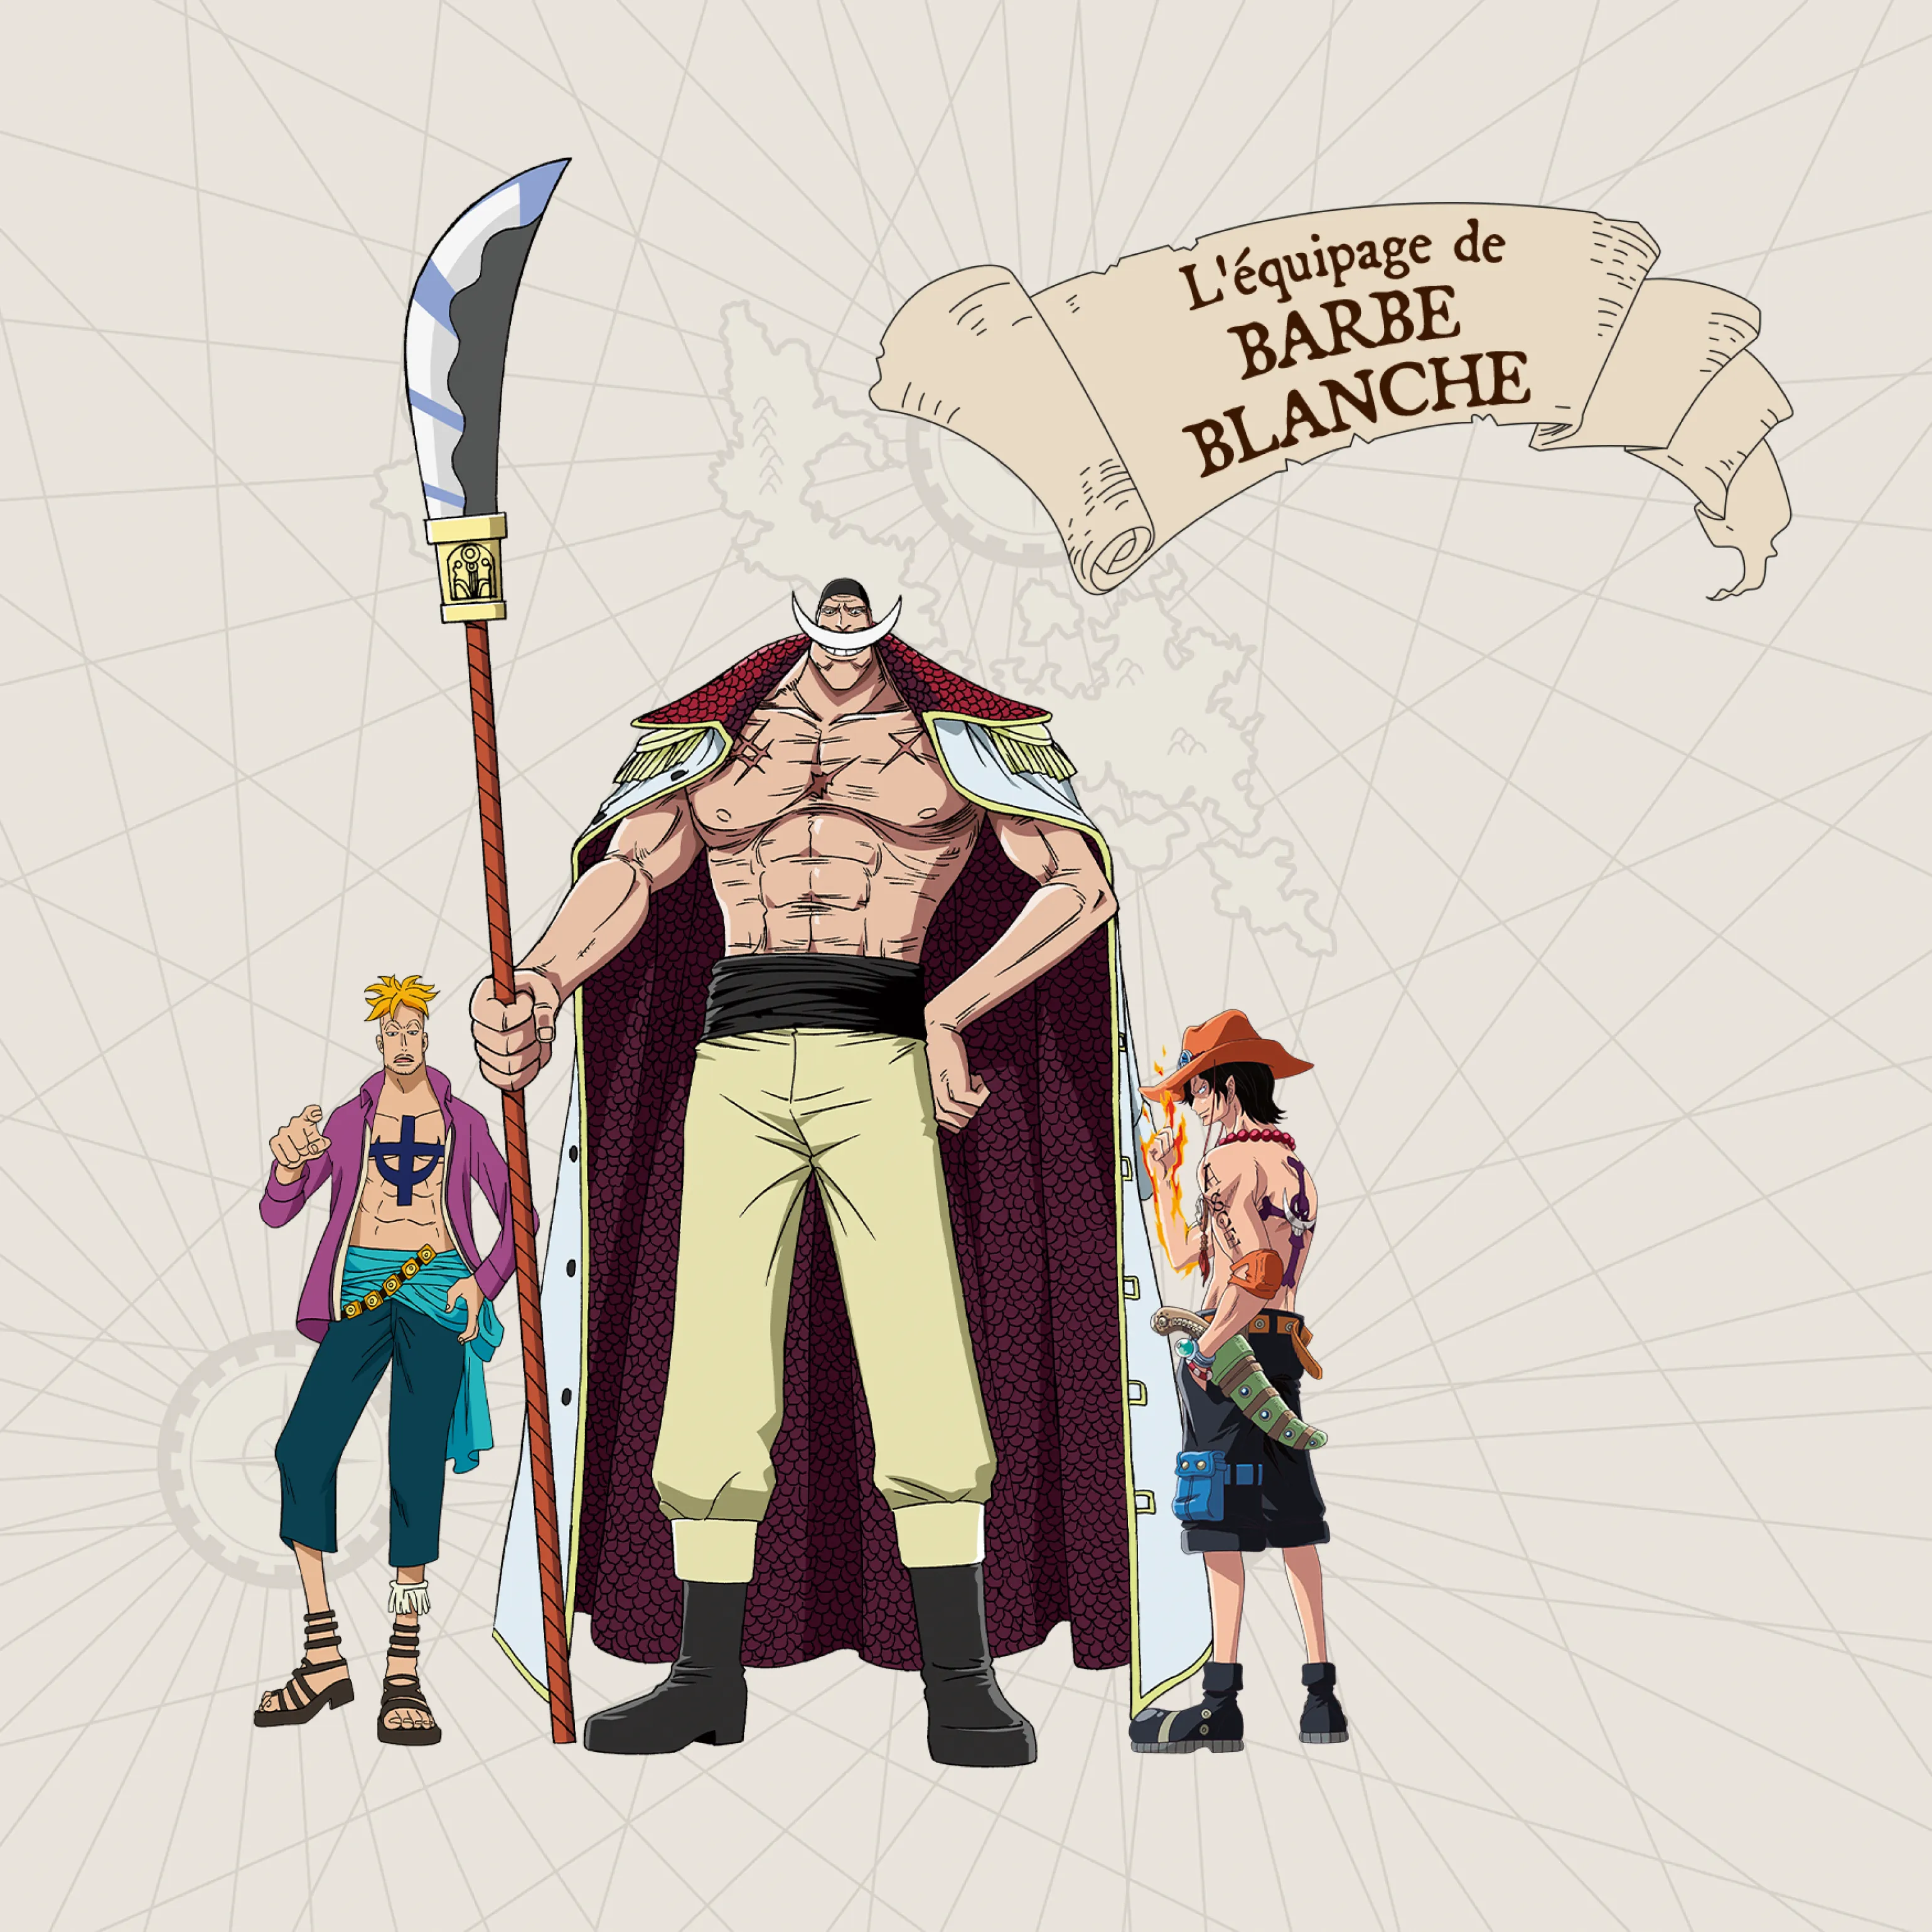 Les supernovae One Piece